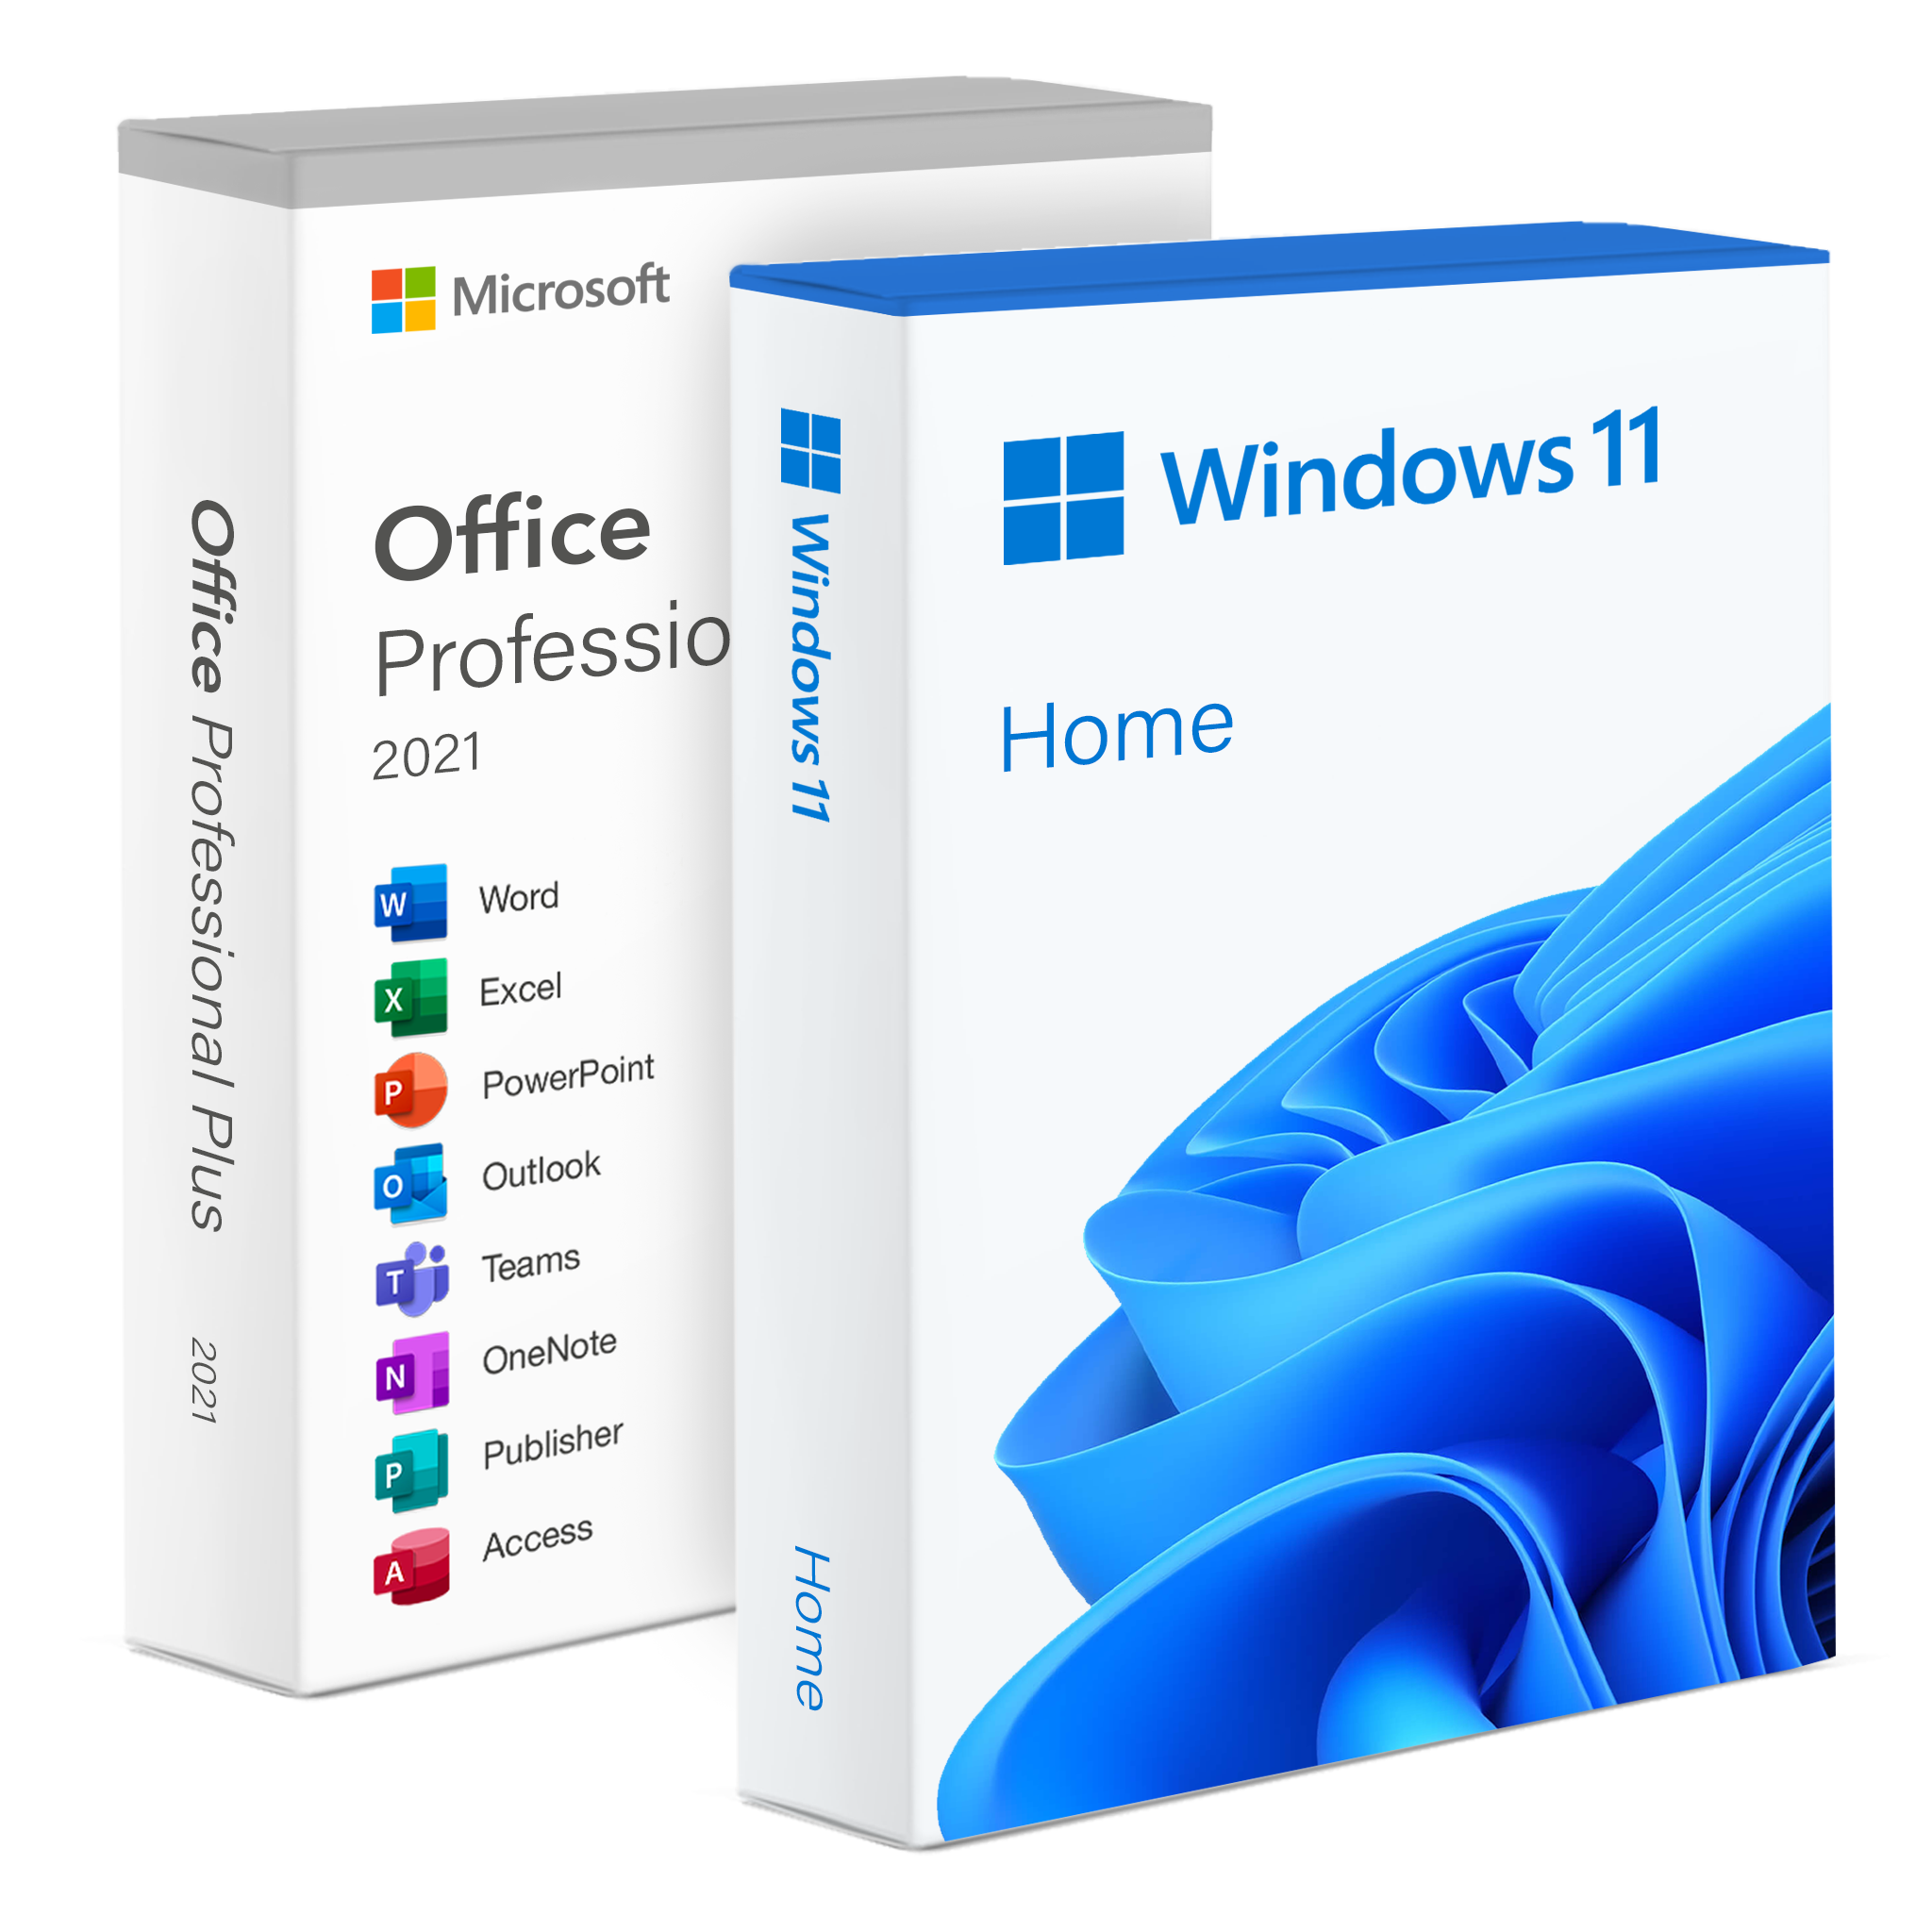 Microsoft Office 2021 Pro Plus + Windows 11 Home